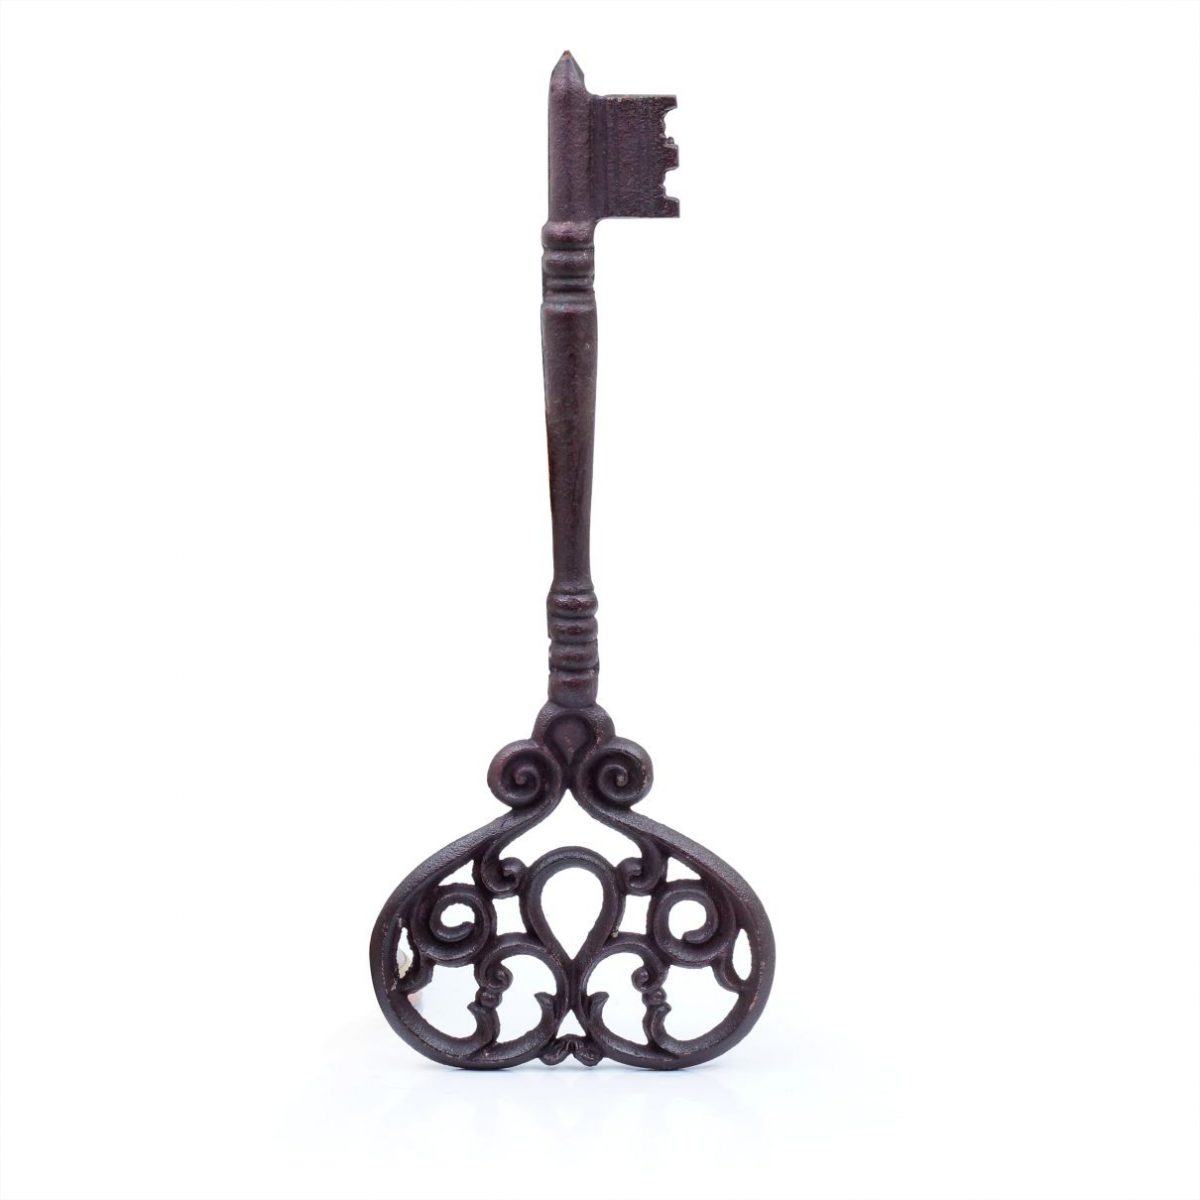 Nagina International The Grand Key - Cast Iron Wall Sculpture Skeleton Key | Heavy Wall Decor Galvanized Key